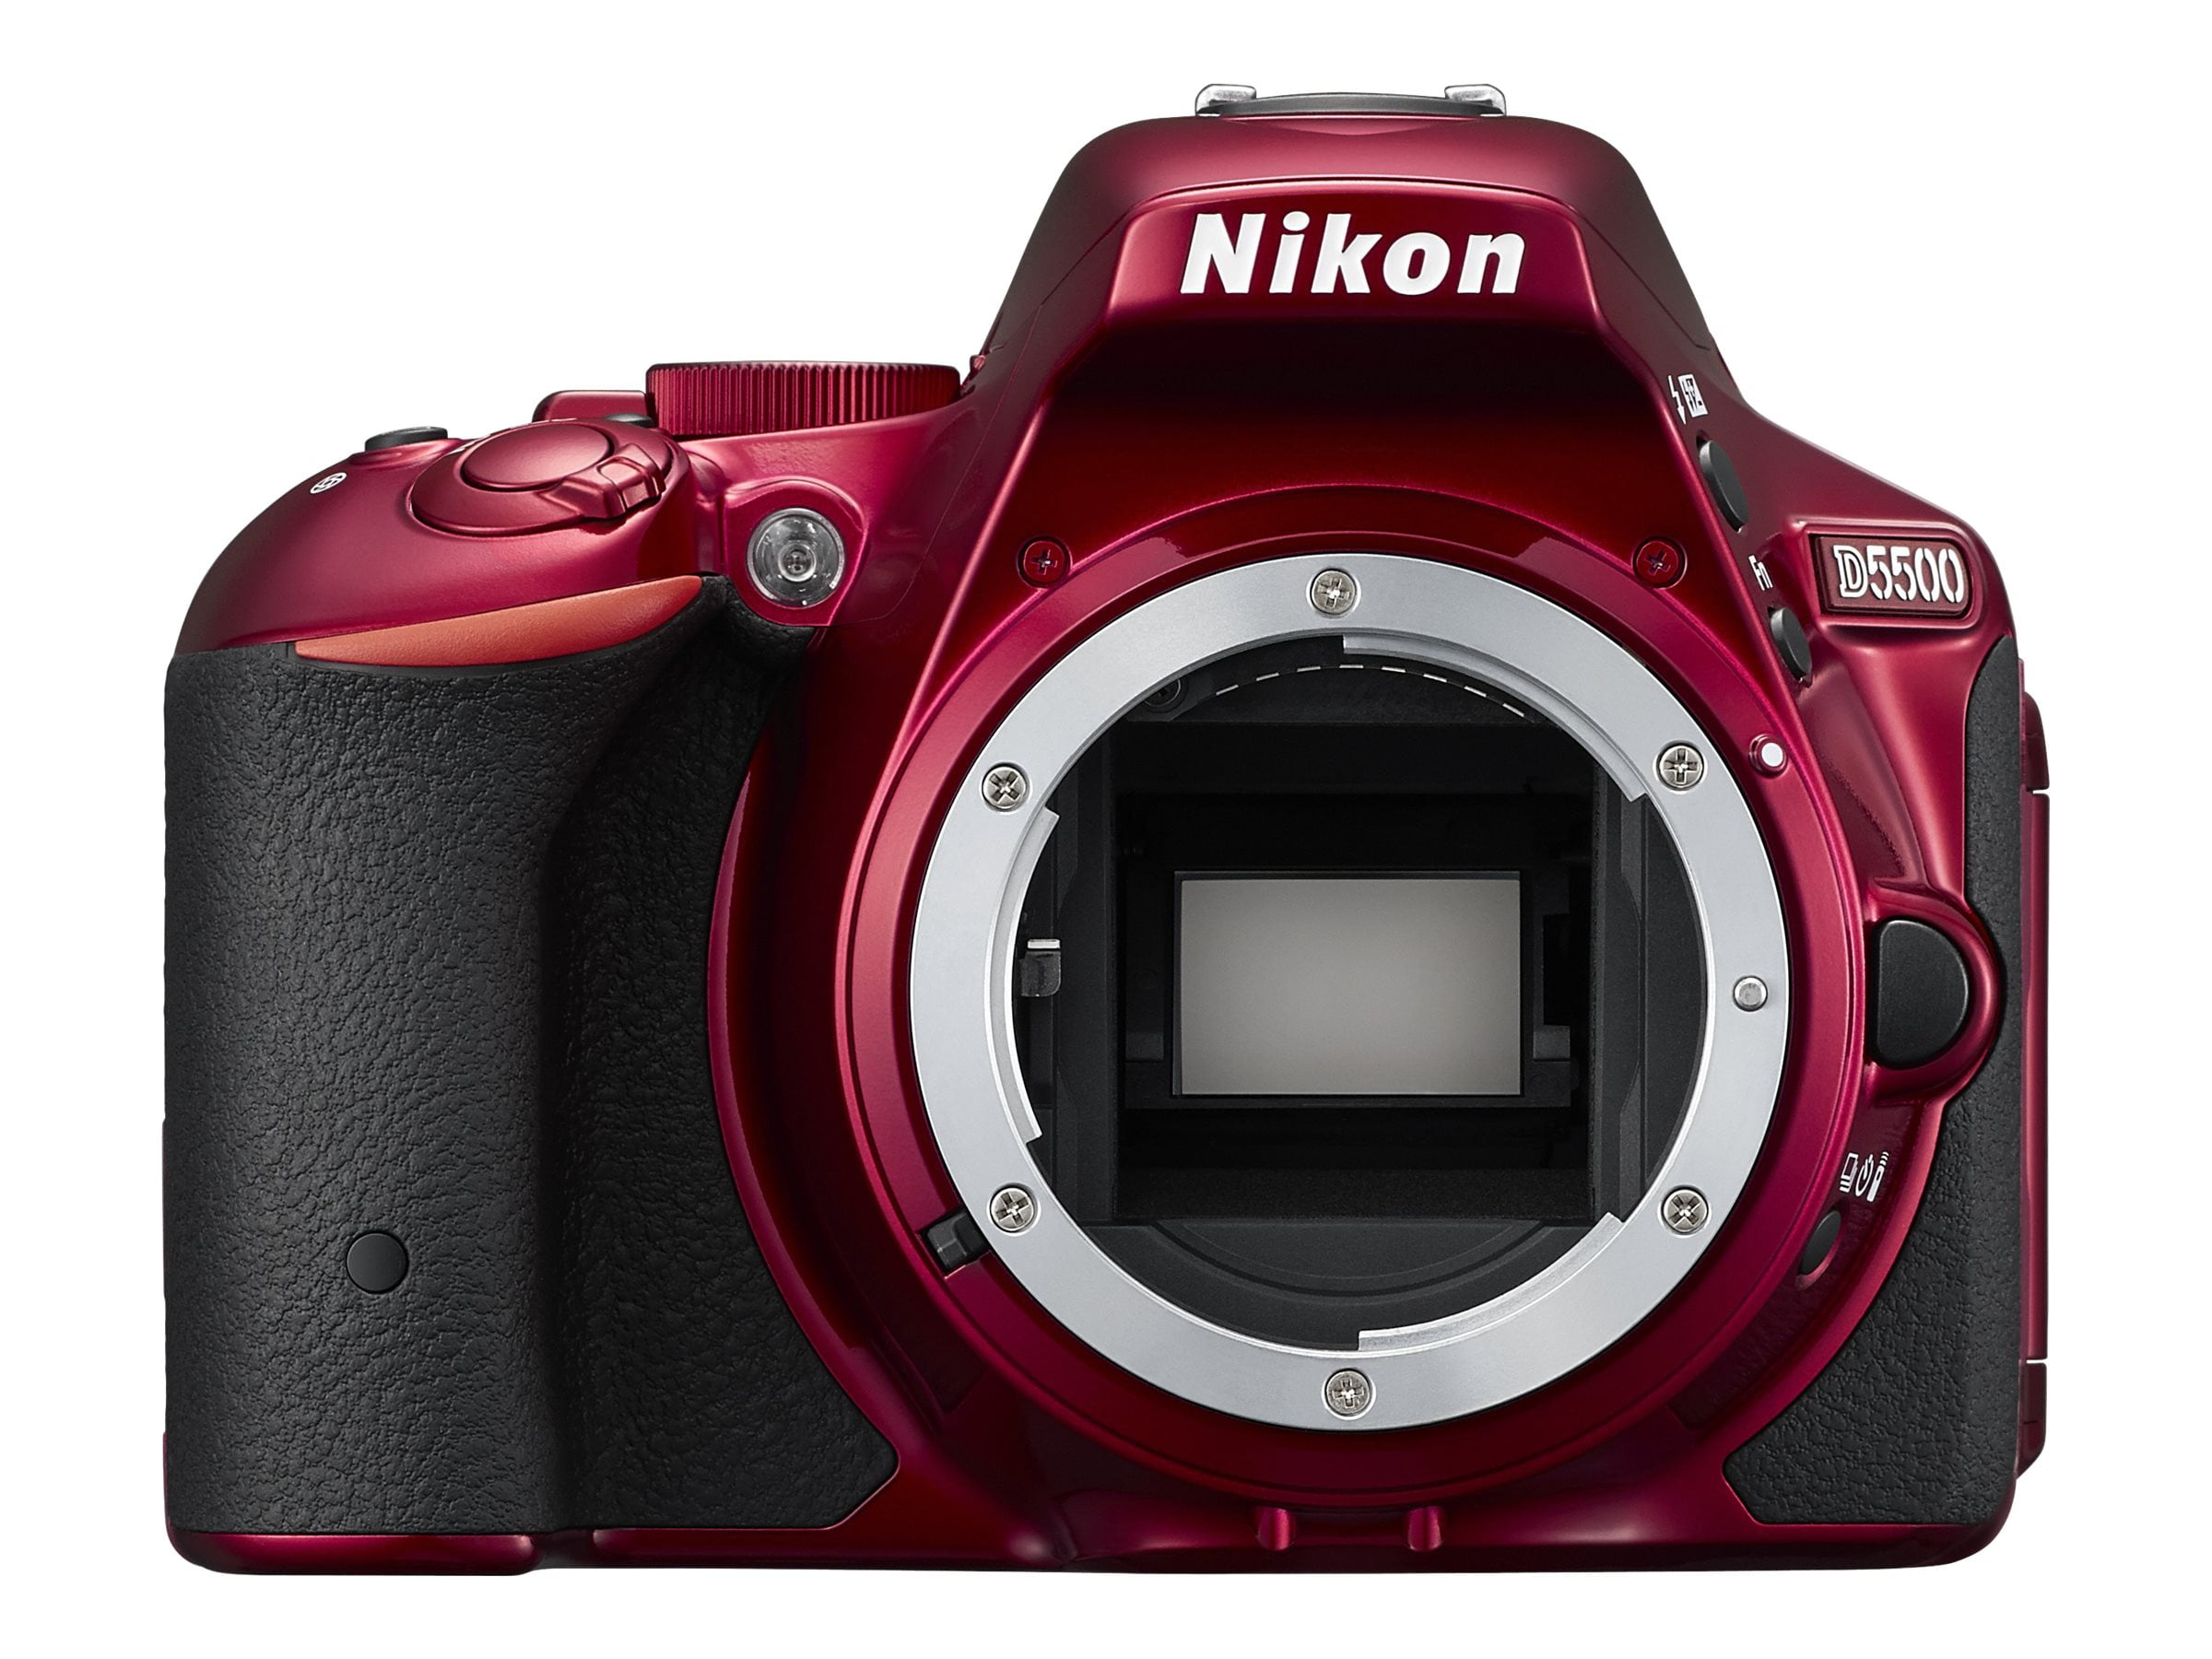 Nikon D5500 Digital SLR Camera with 24.2 Megapixels and 18 